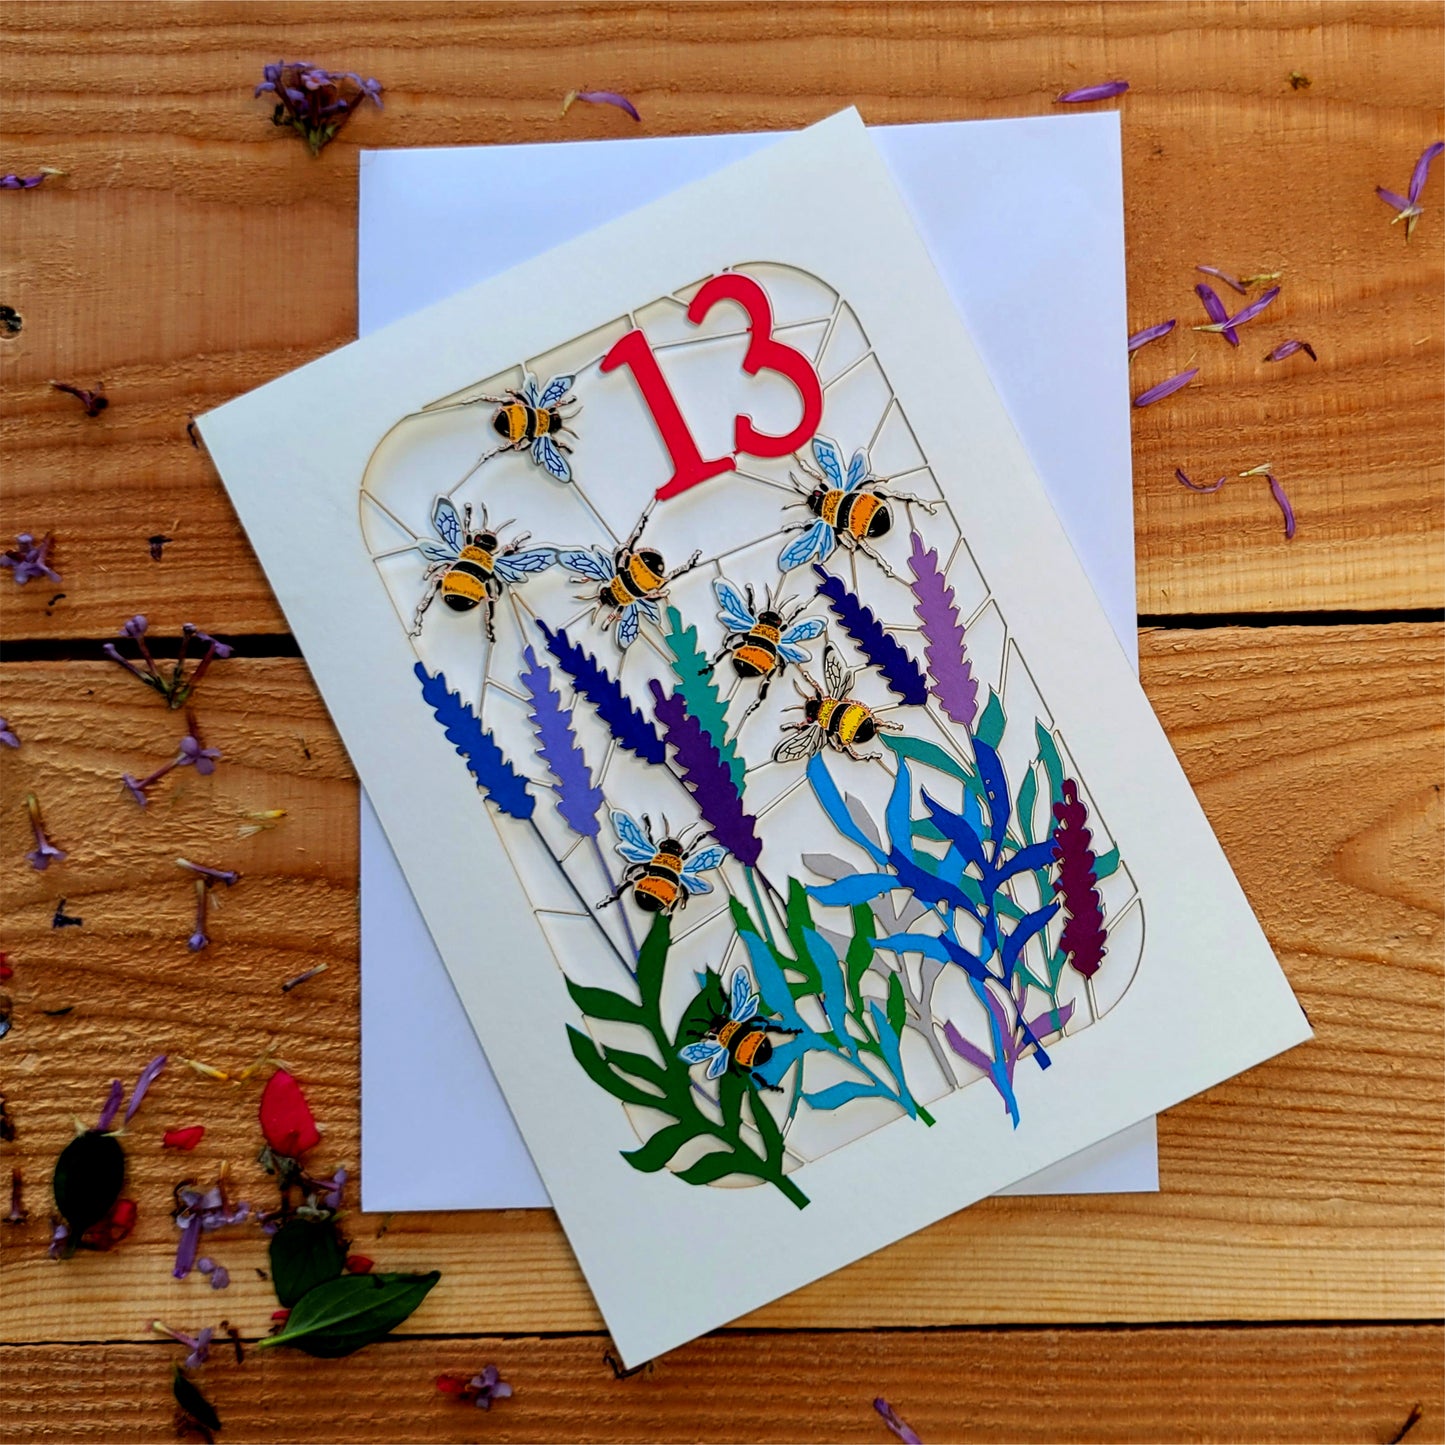 Age 13 Birthday Card, 13th Birthday Card, Bee Card - Be013